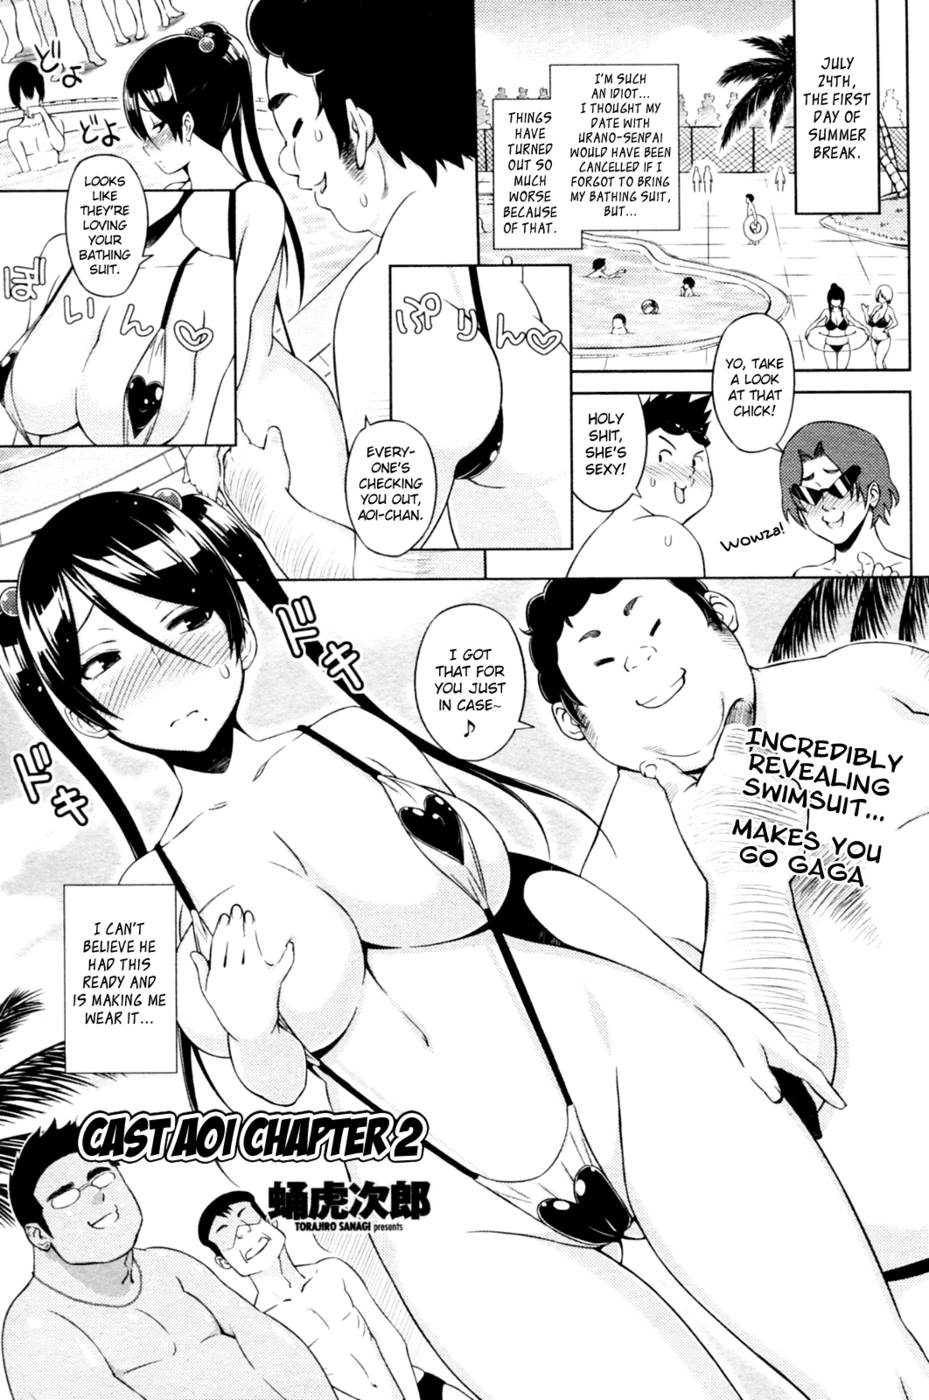 Hentai Manga Comic-Cast Aoi-Chapter 1-2-19